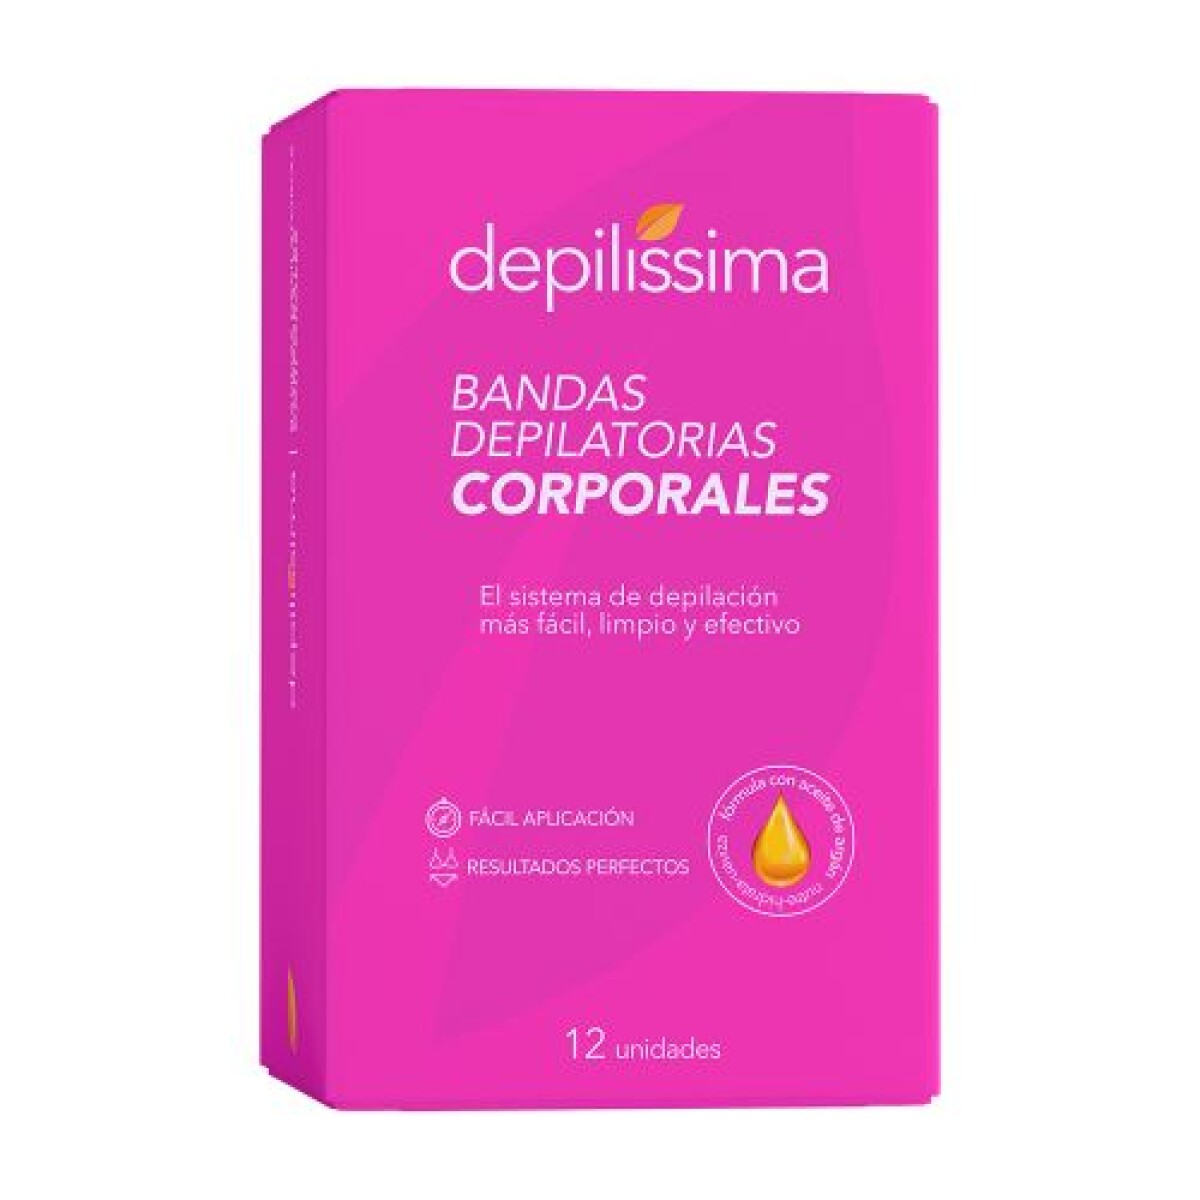 Bandas depilatorias Depilissima - Corporales 